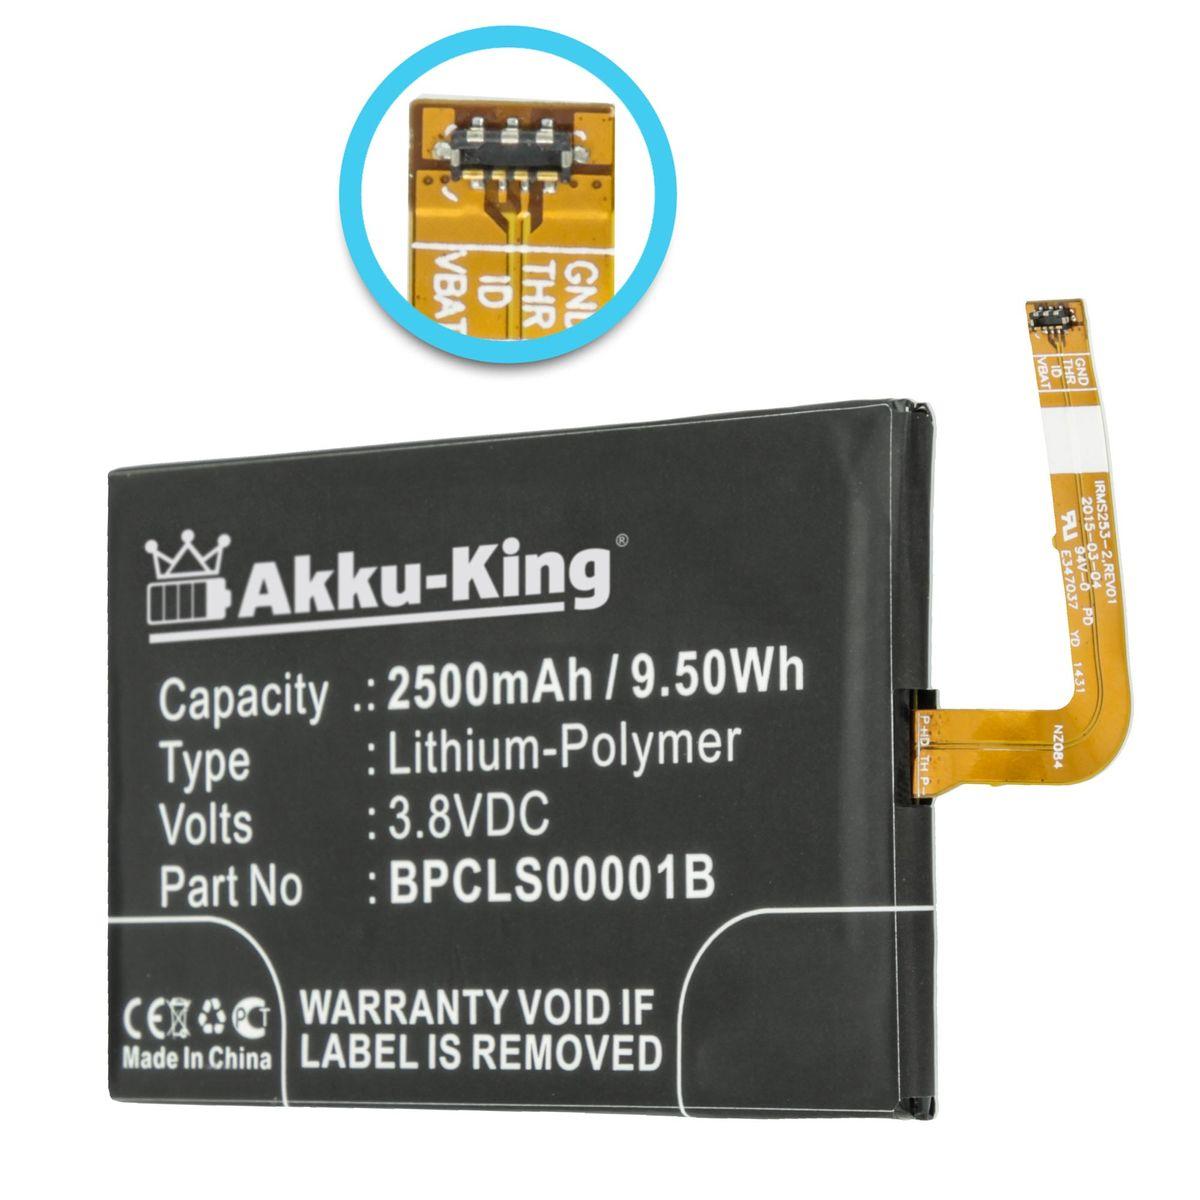 AKKU-KING Akku für Blackberry BPCLS00001B Li-Polymer 3.8 Volt, 2500mAh Handy-Akku